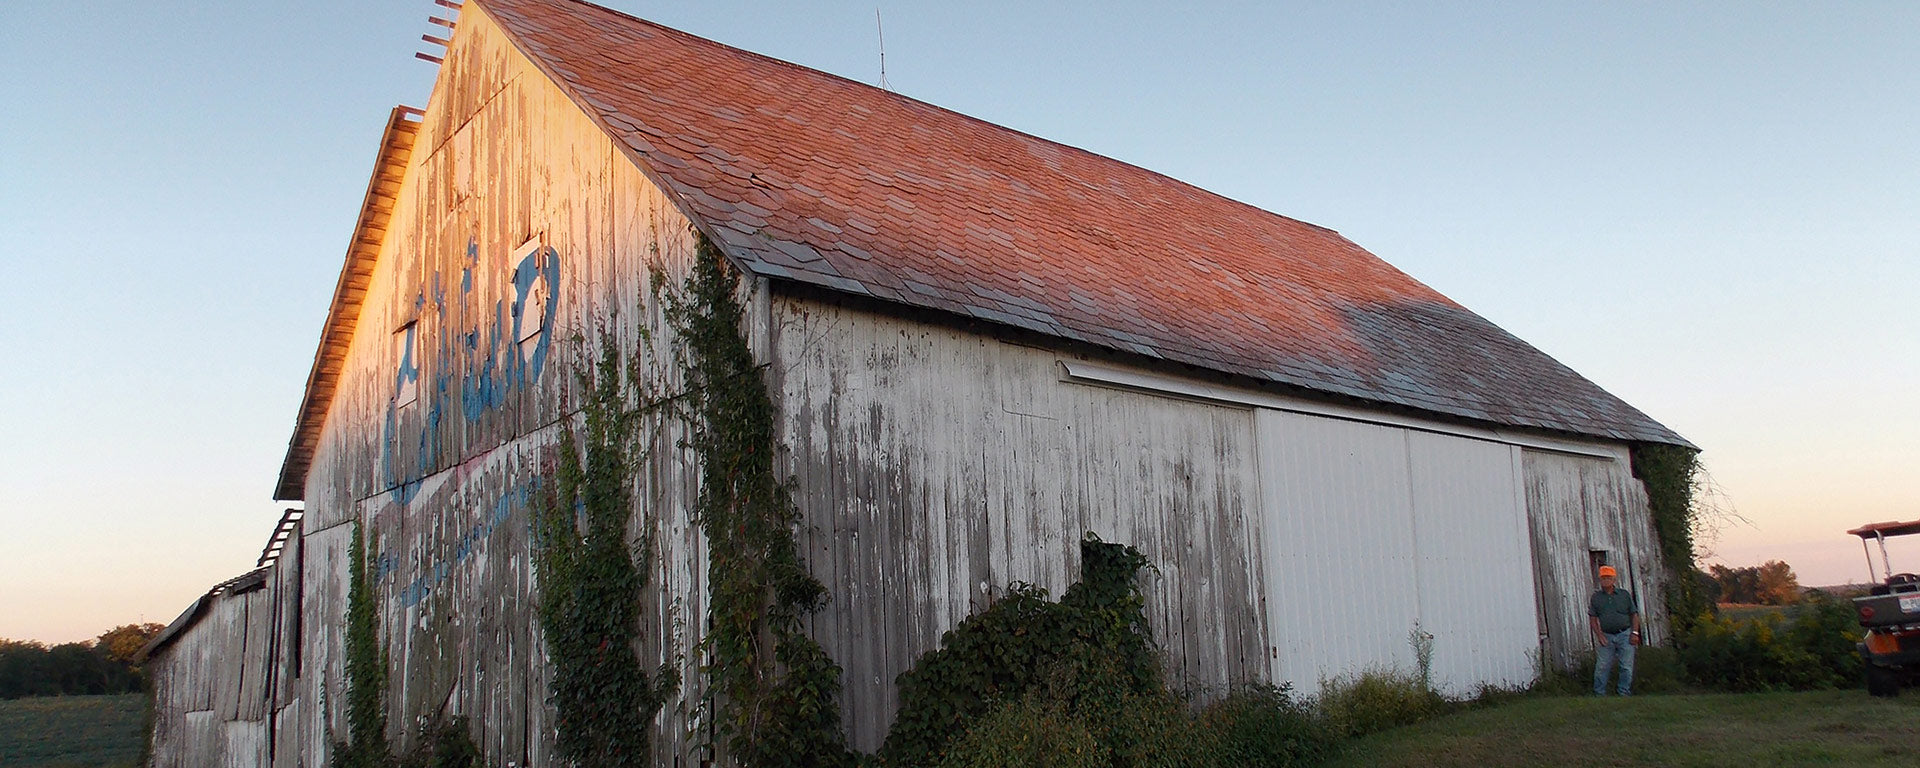 The Somerset Barn, Ohio